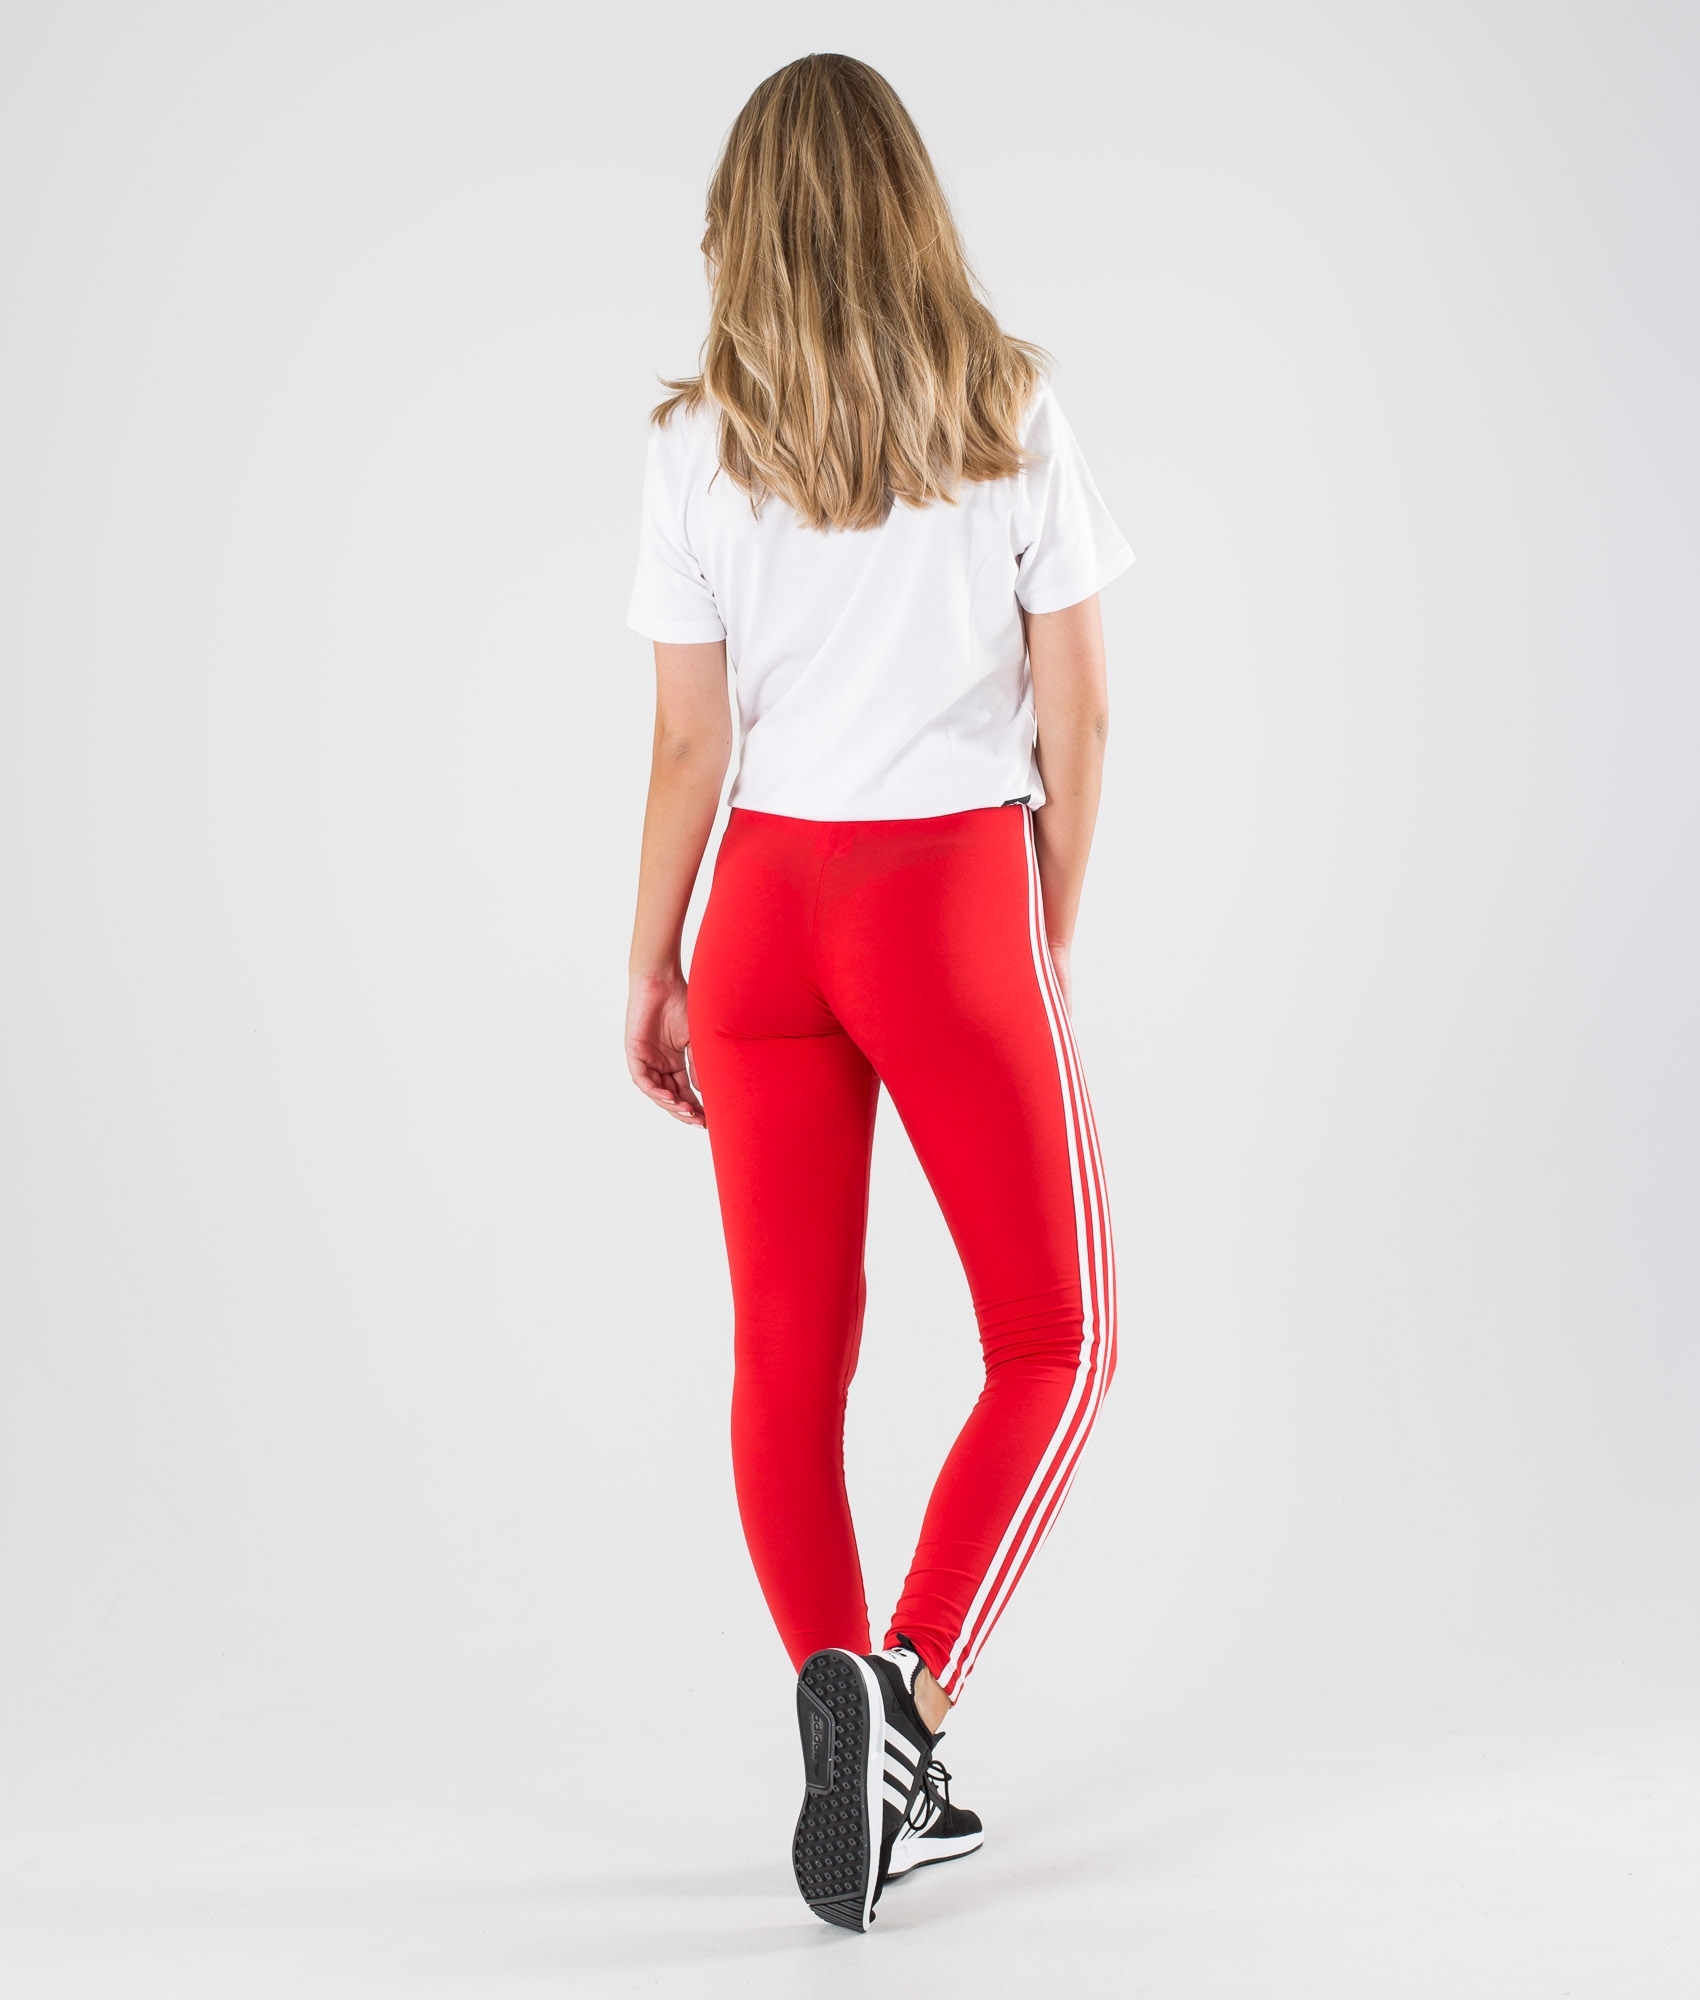 adidas red stripe leggings